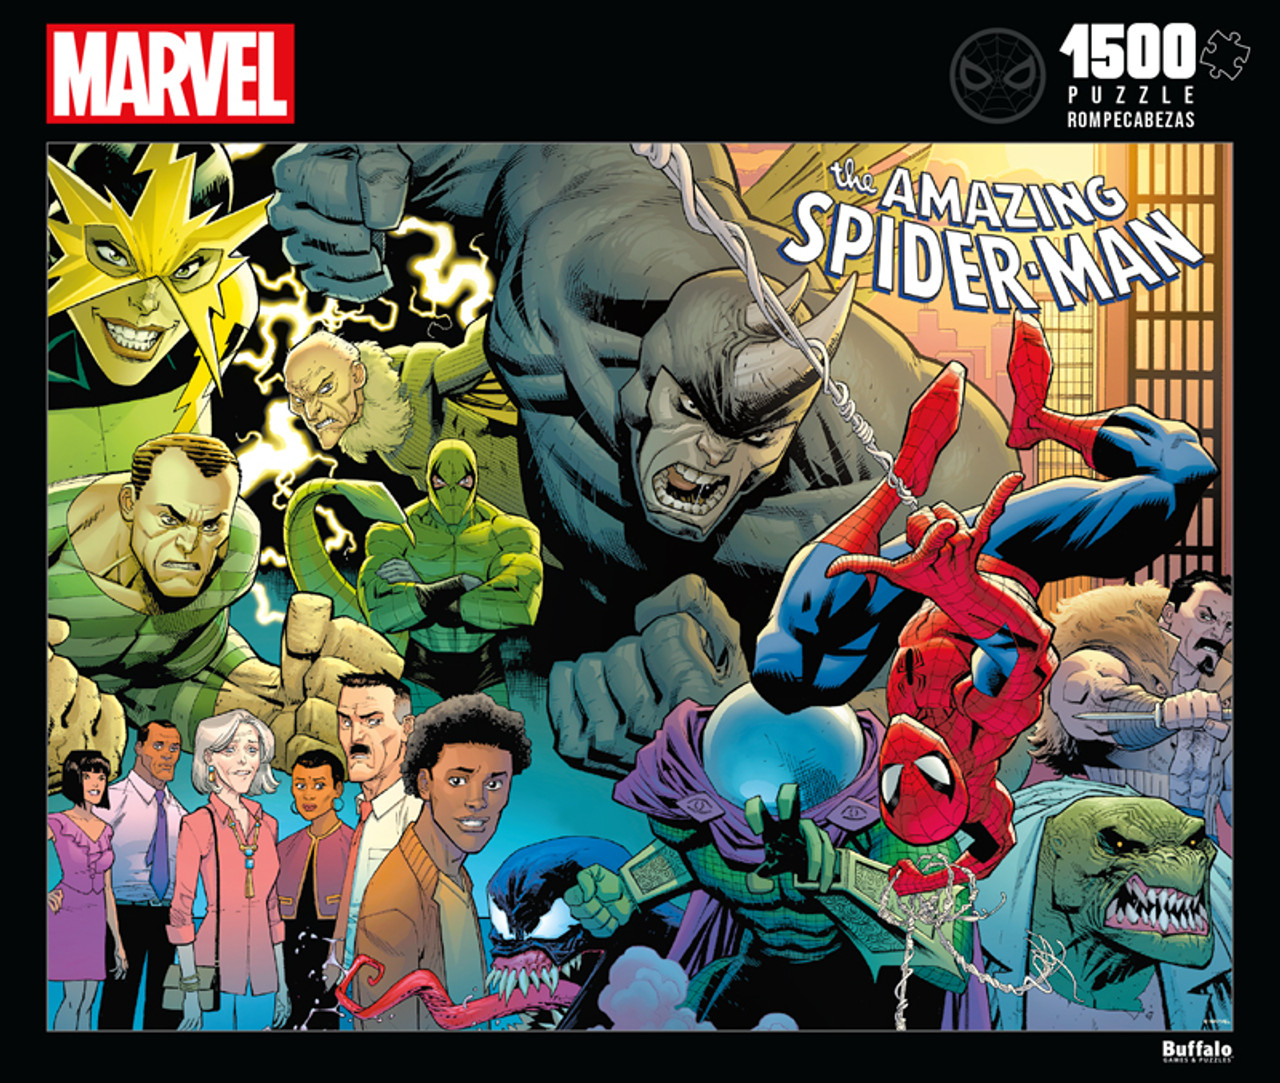 Marvel's Spider-Man Puzzle